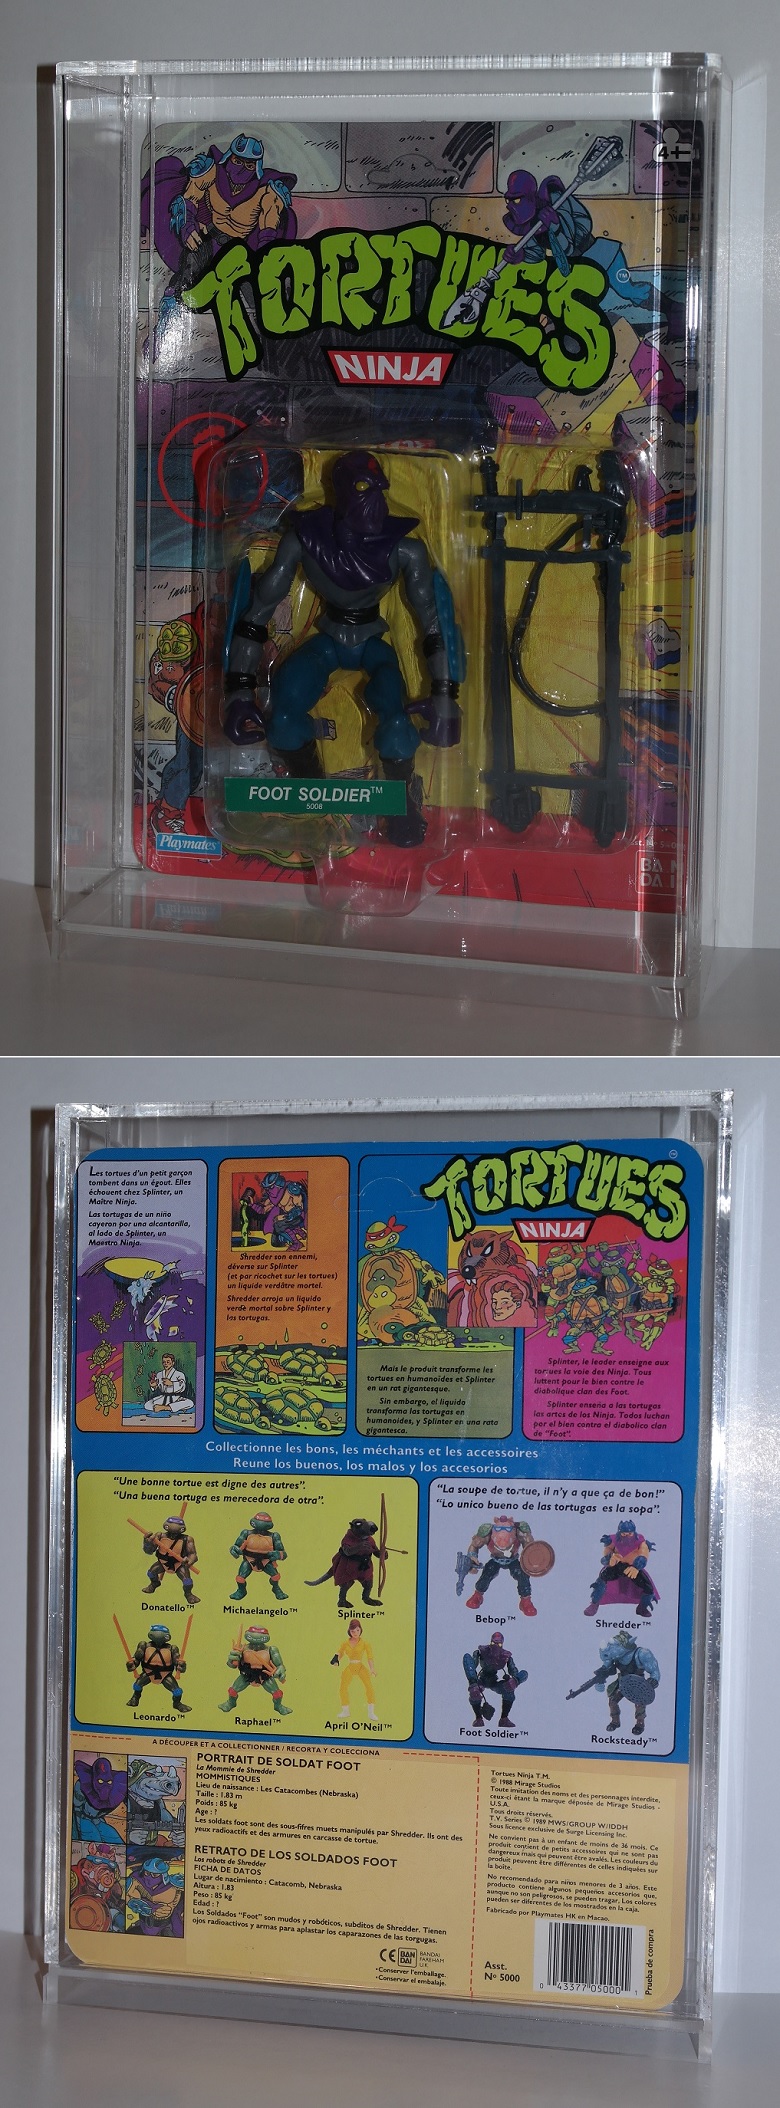 Les Tortues Ninja - Gamme Playmates Bandaï 1988 - 1998 - Page 2 Bliste27